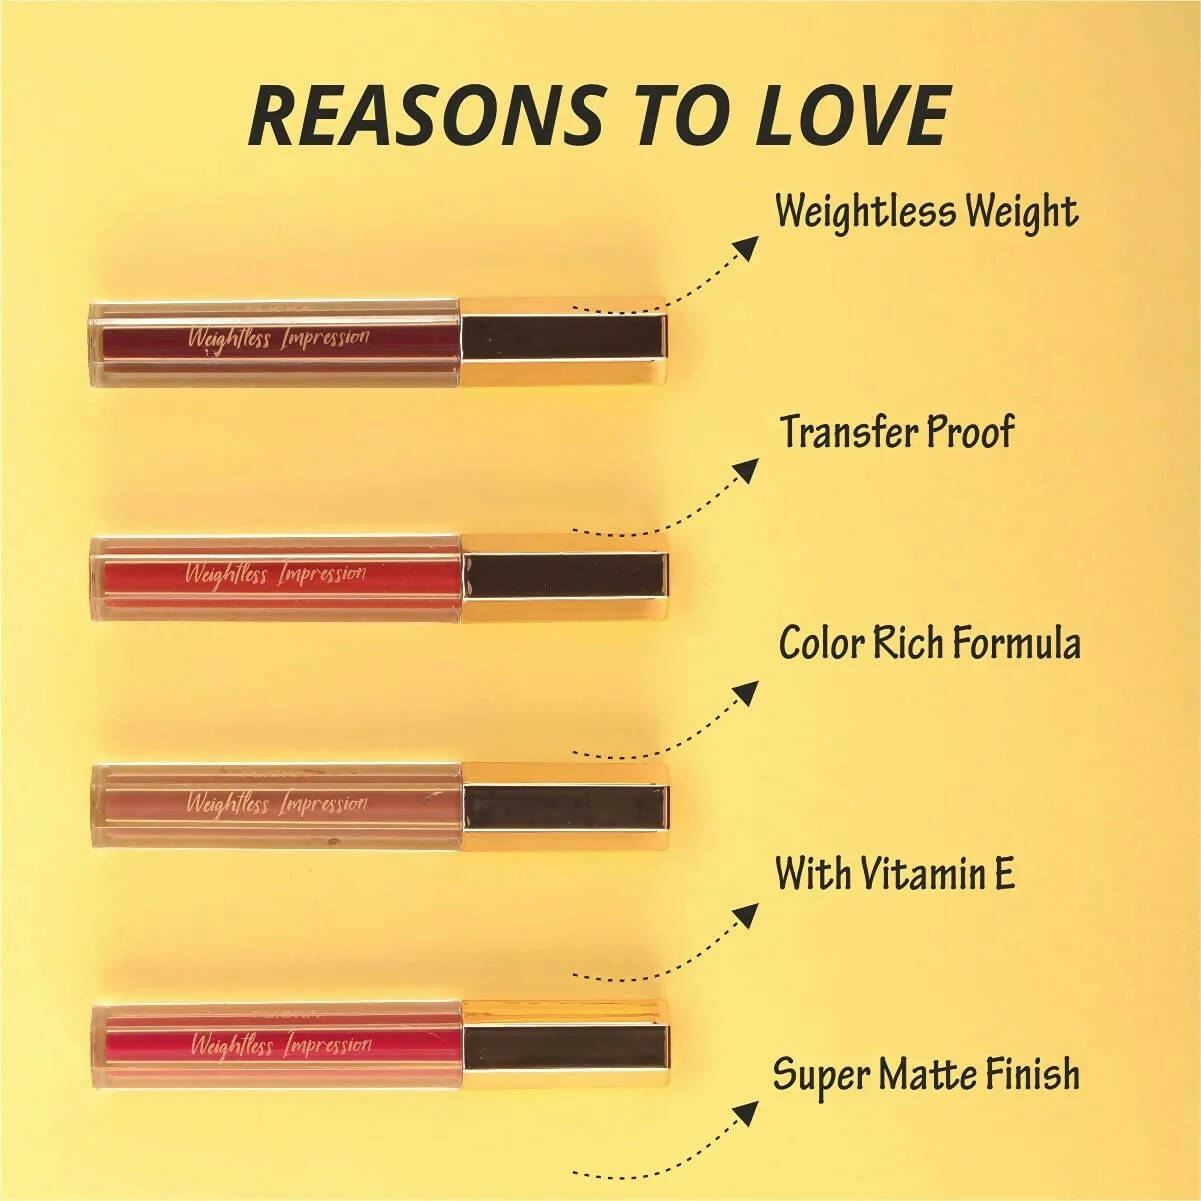 FLiCKA Weightless Impression 05 May - Maroon Matte Finish Liquid Lipstick - Distacart